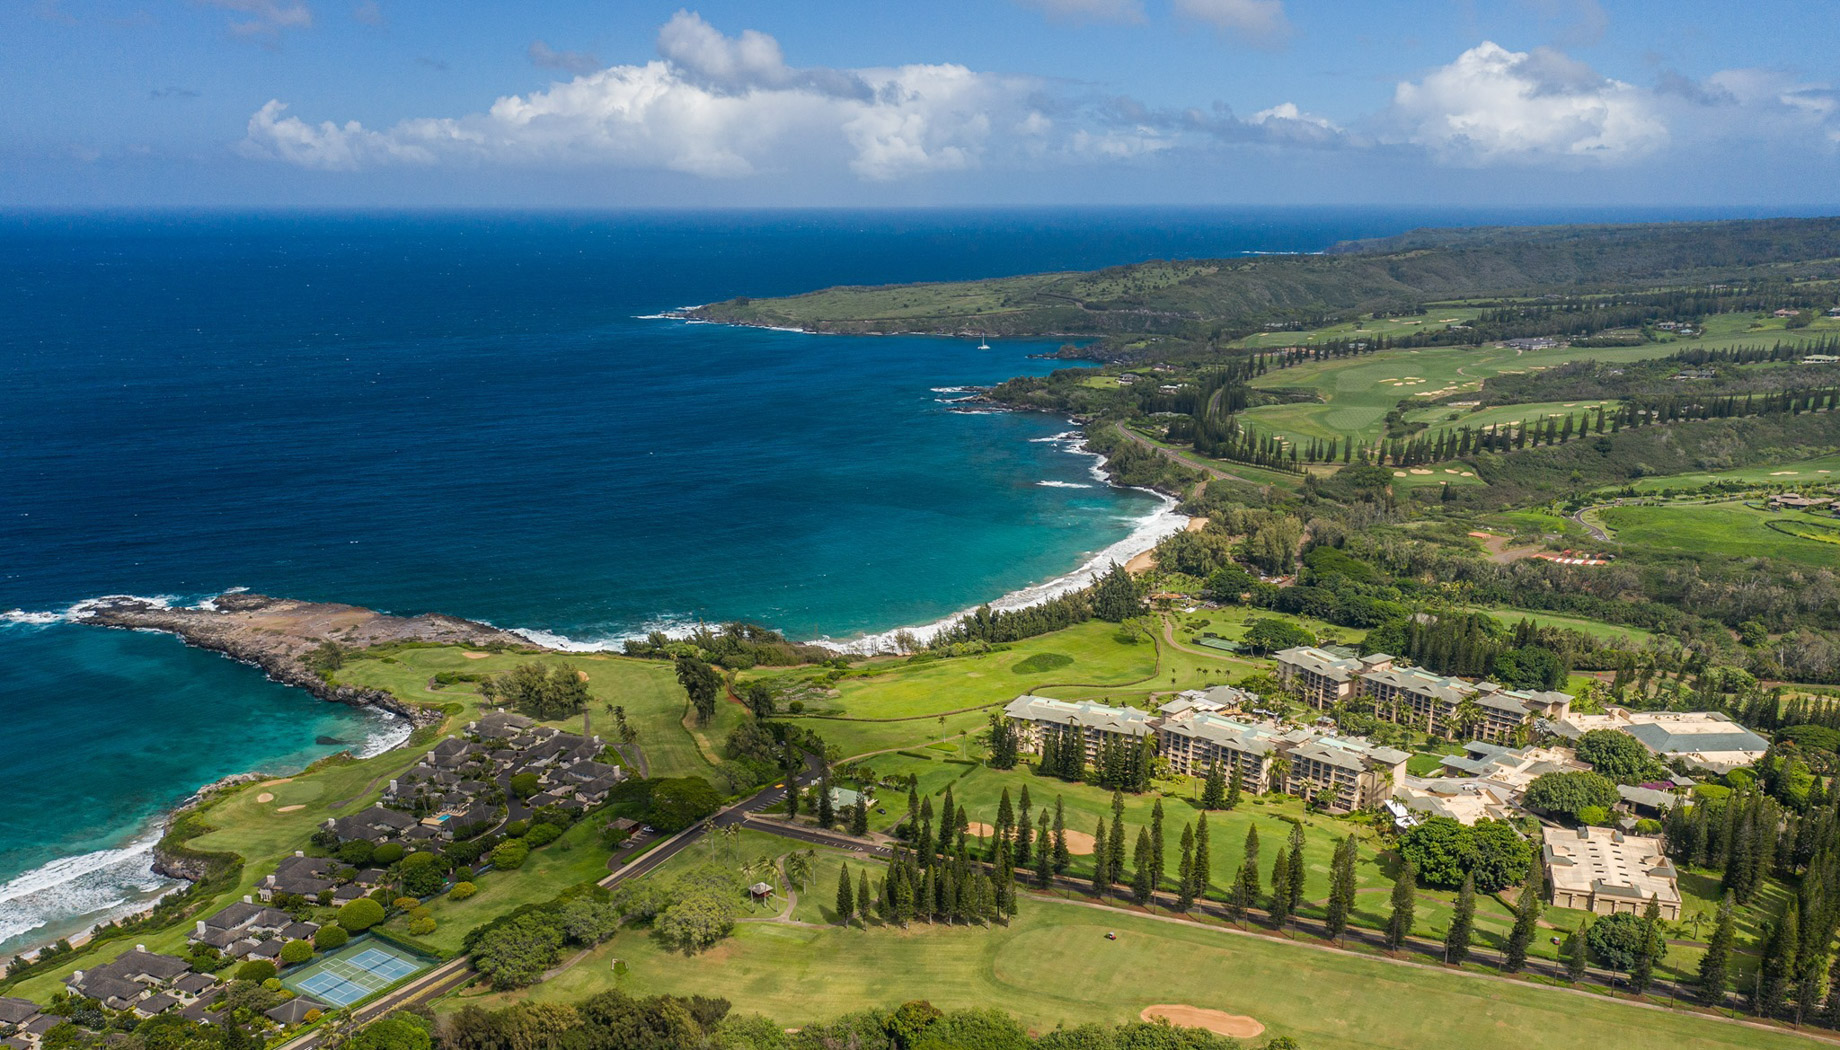 The Ritz-Carlton Maui, Kapalua Resort - Kapalua, HI, USA - Oceanfront Resort Aerial View